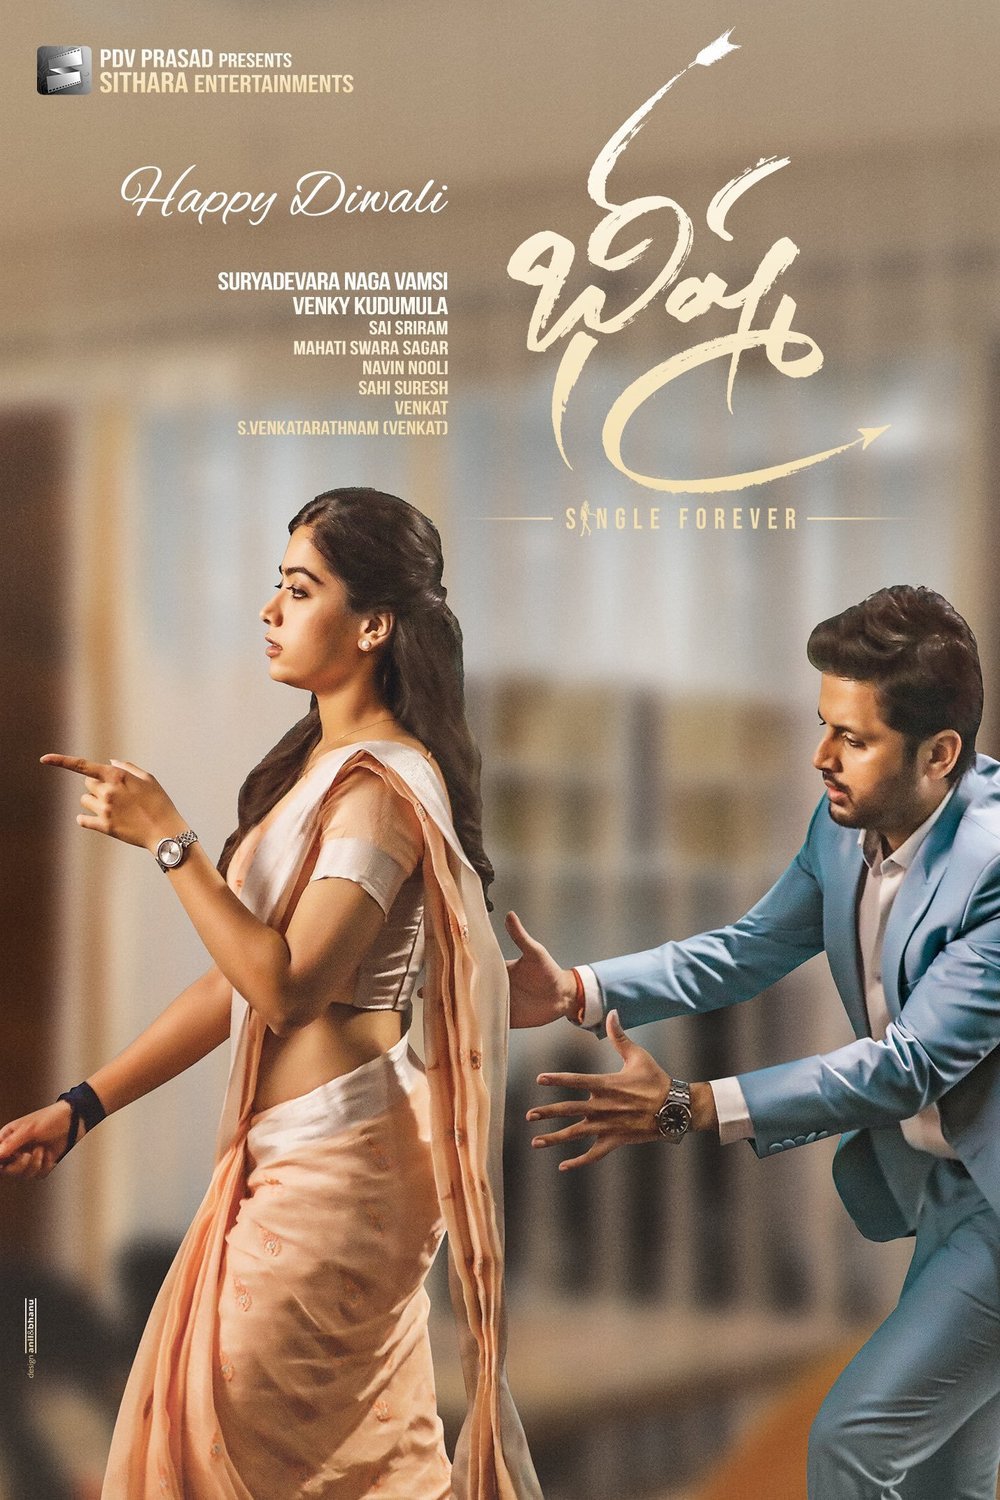 Telugu poster of the movie Bheeshma